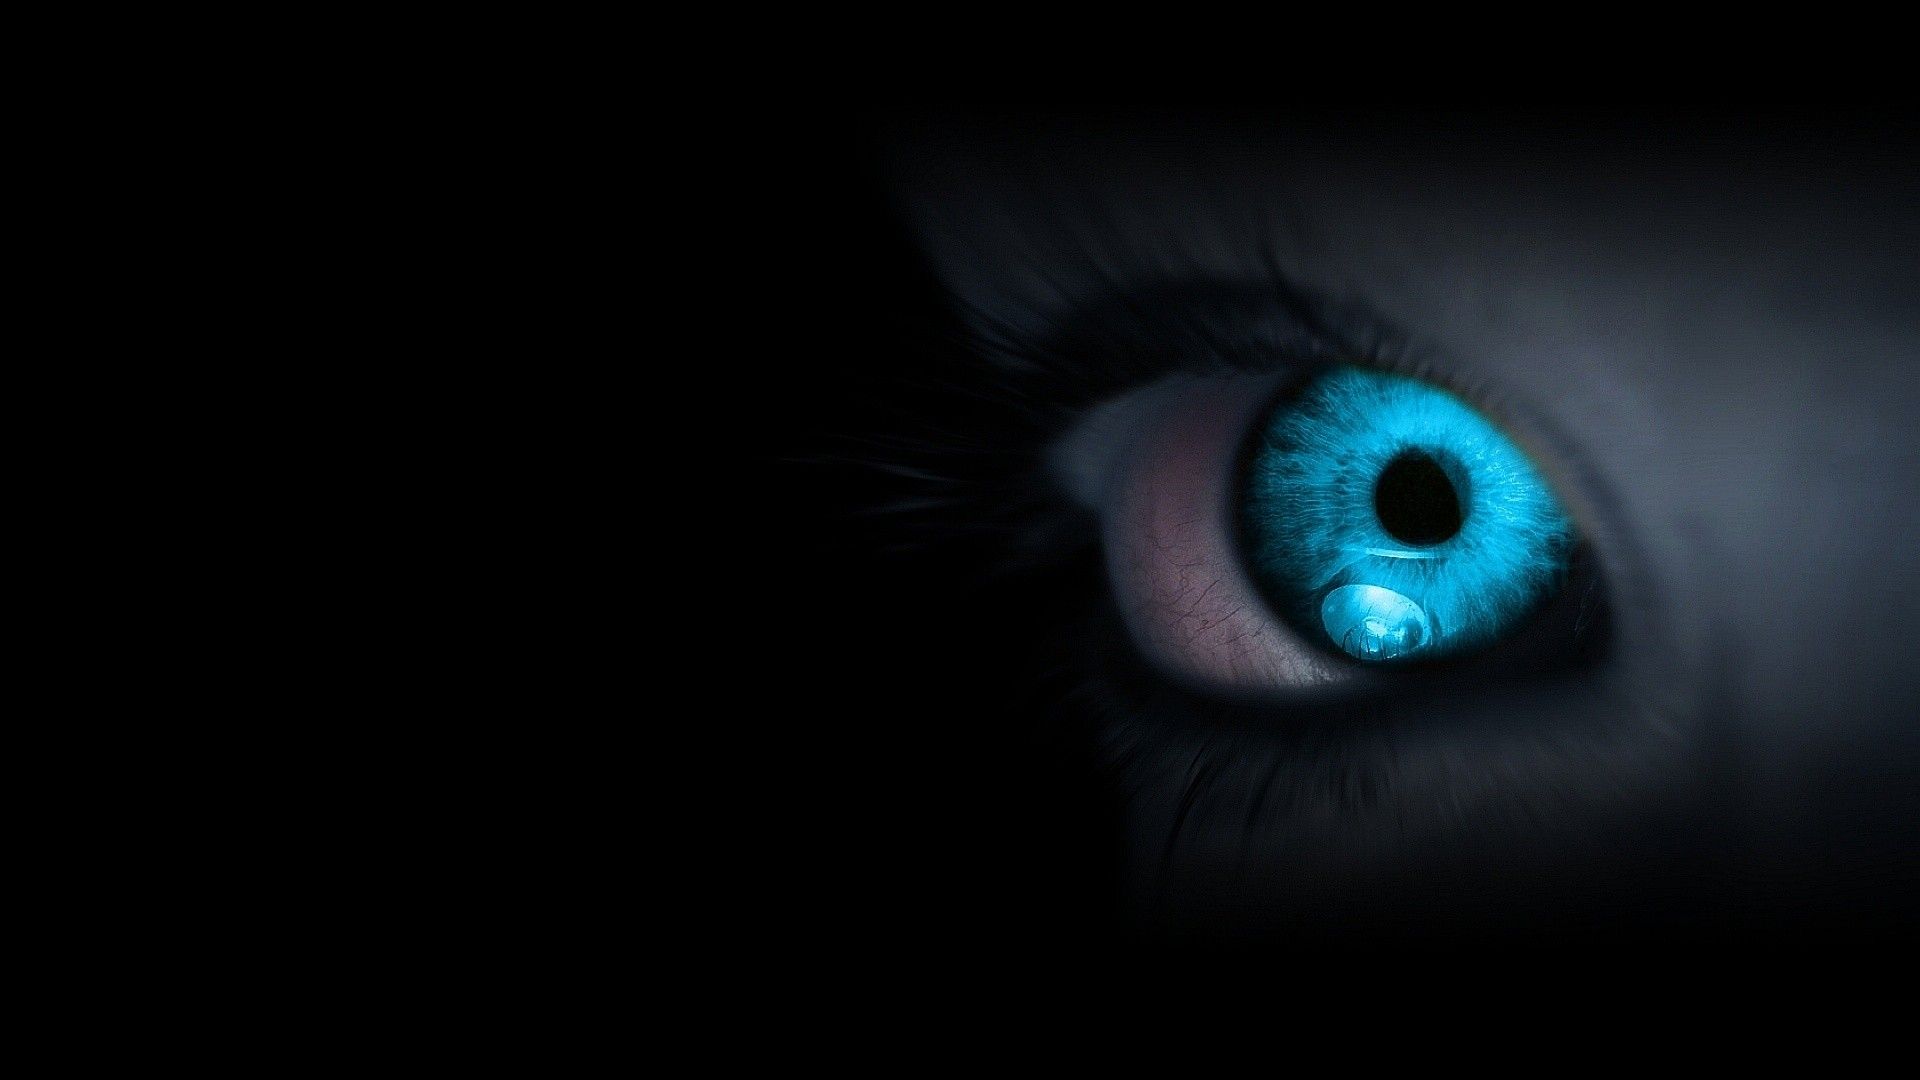 Beautiful Blue Eyes Women. Eyes wallpaper, Turquoise eyes, Blue eyes